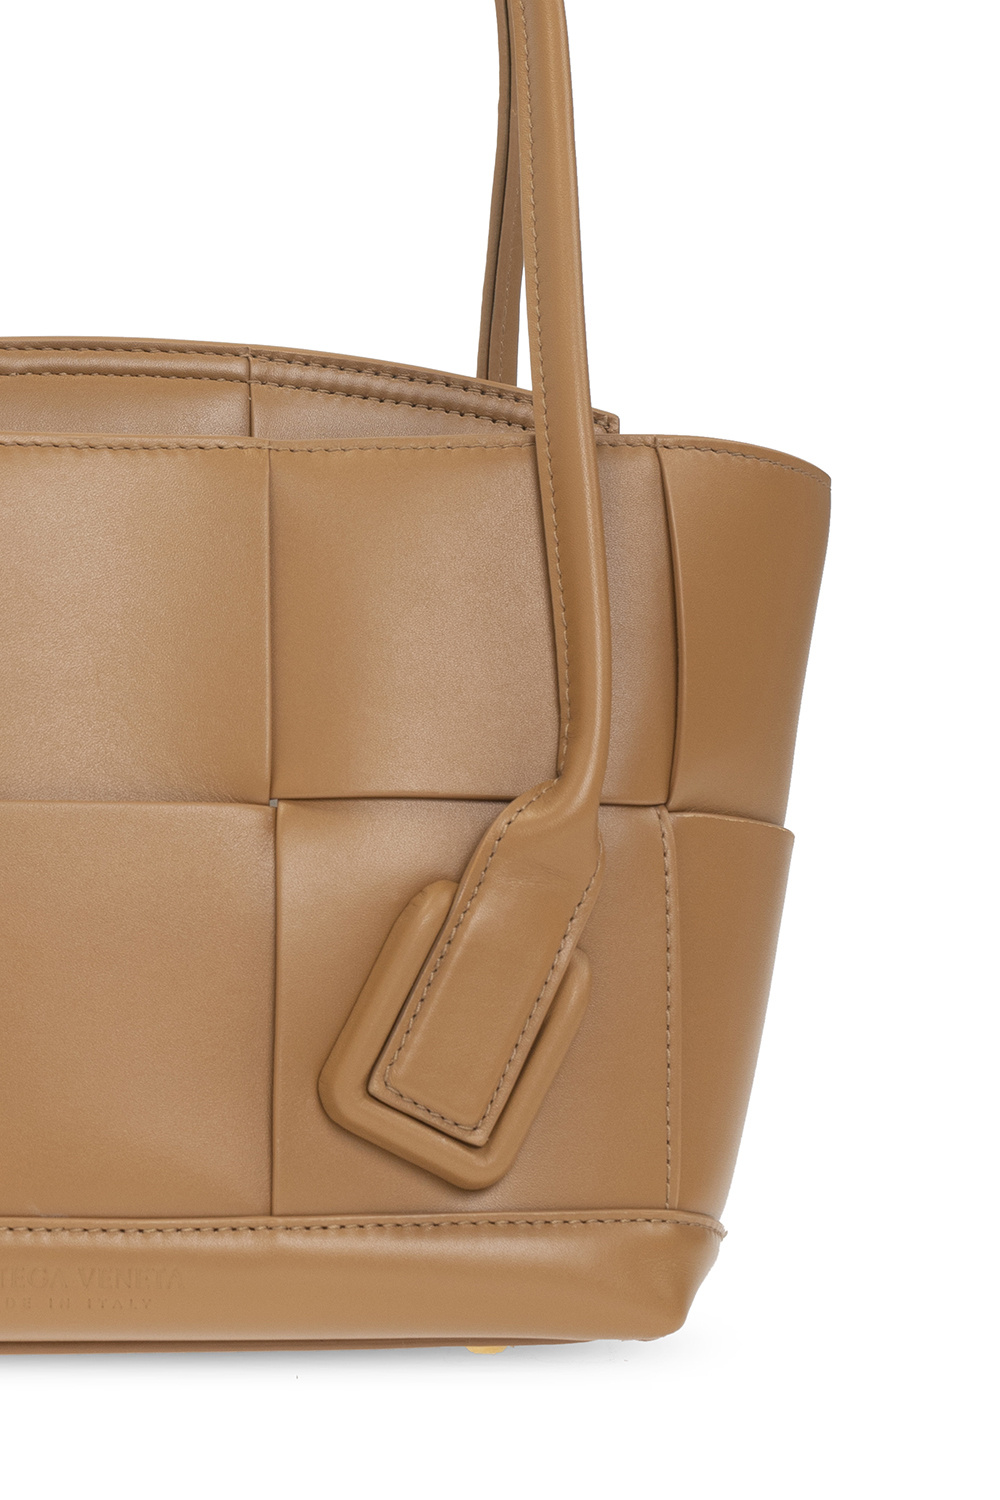 Bottega Veneta ‘Arco’ hand bag